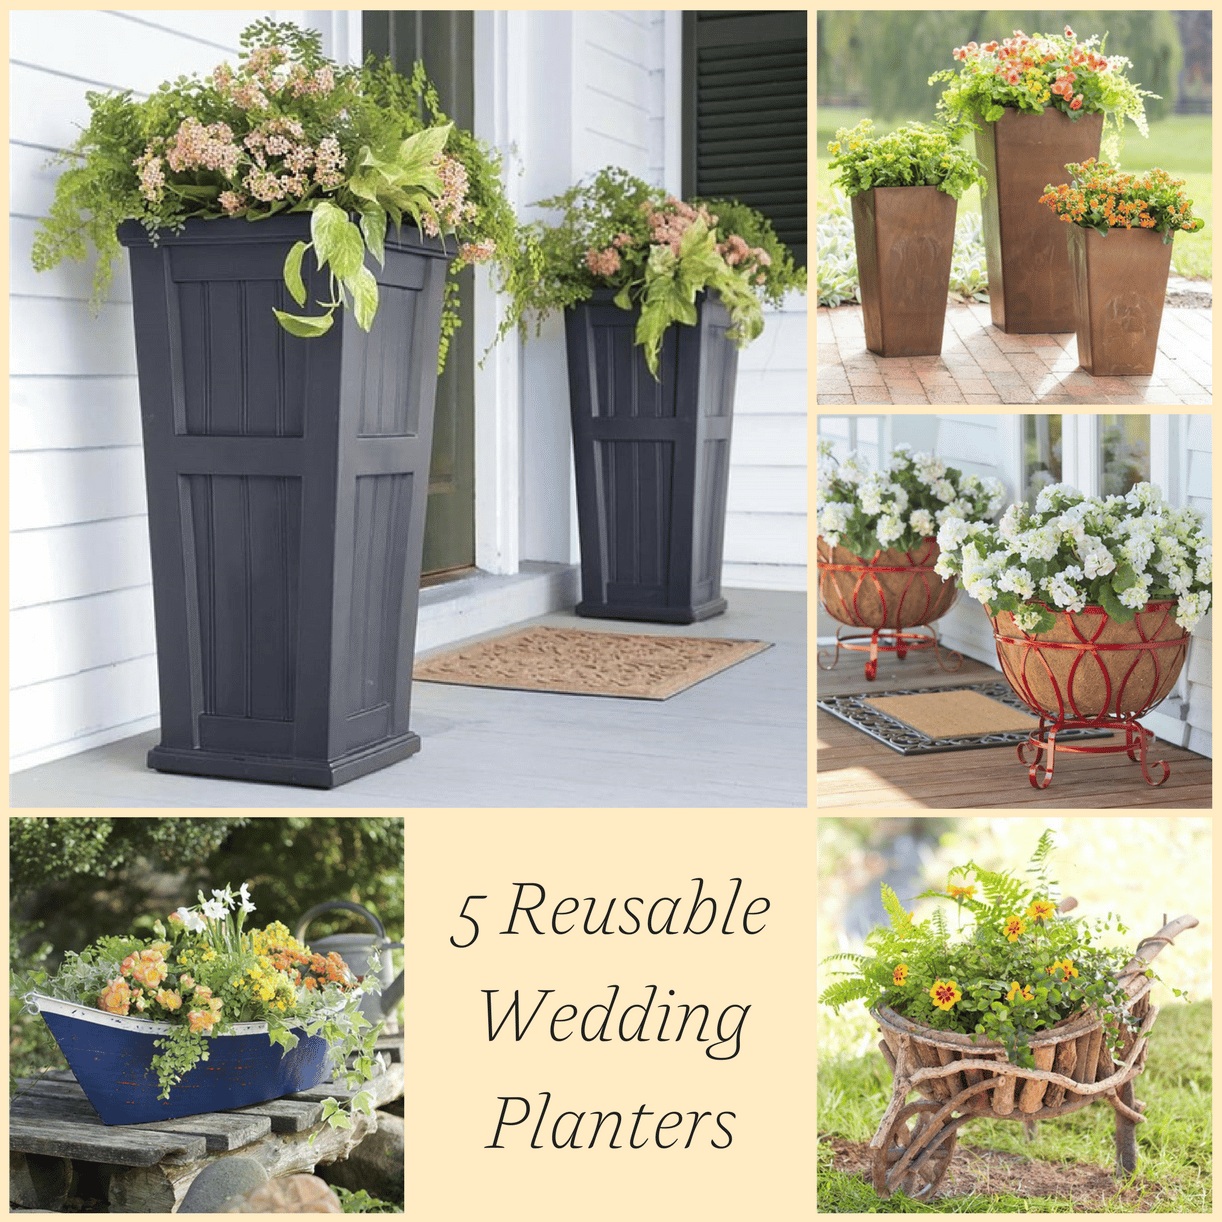 5 Reusable Wedding Planters as seen on Hill City Bride - plow and hearth, garden, flowers, urn, wheelbarrow, boat